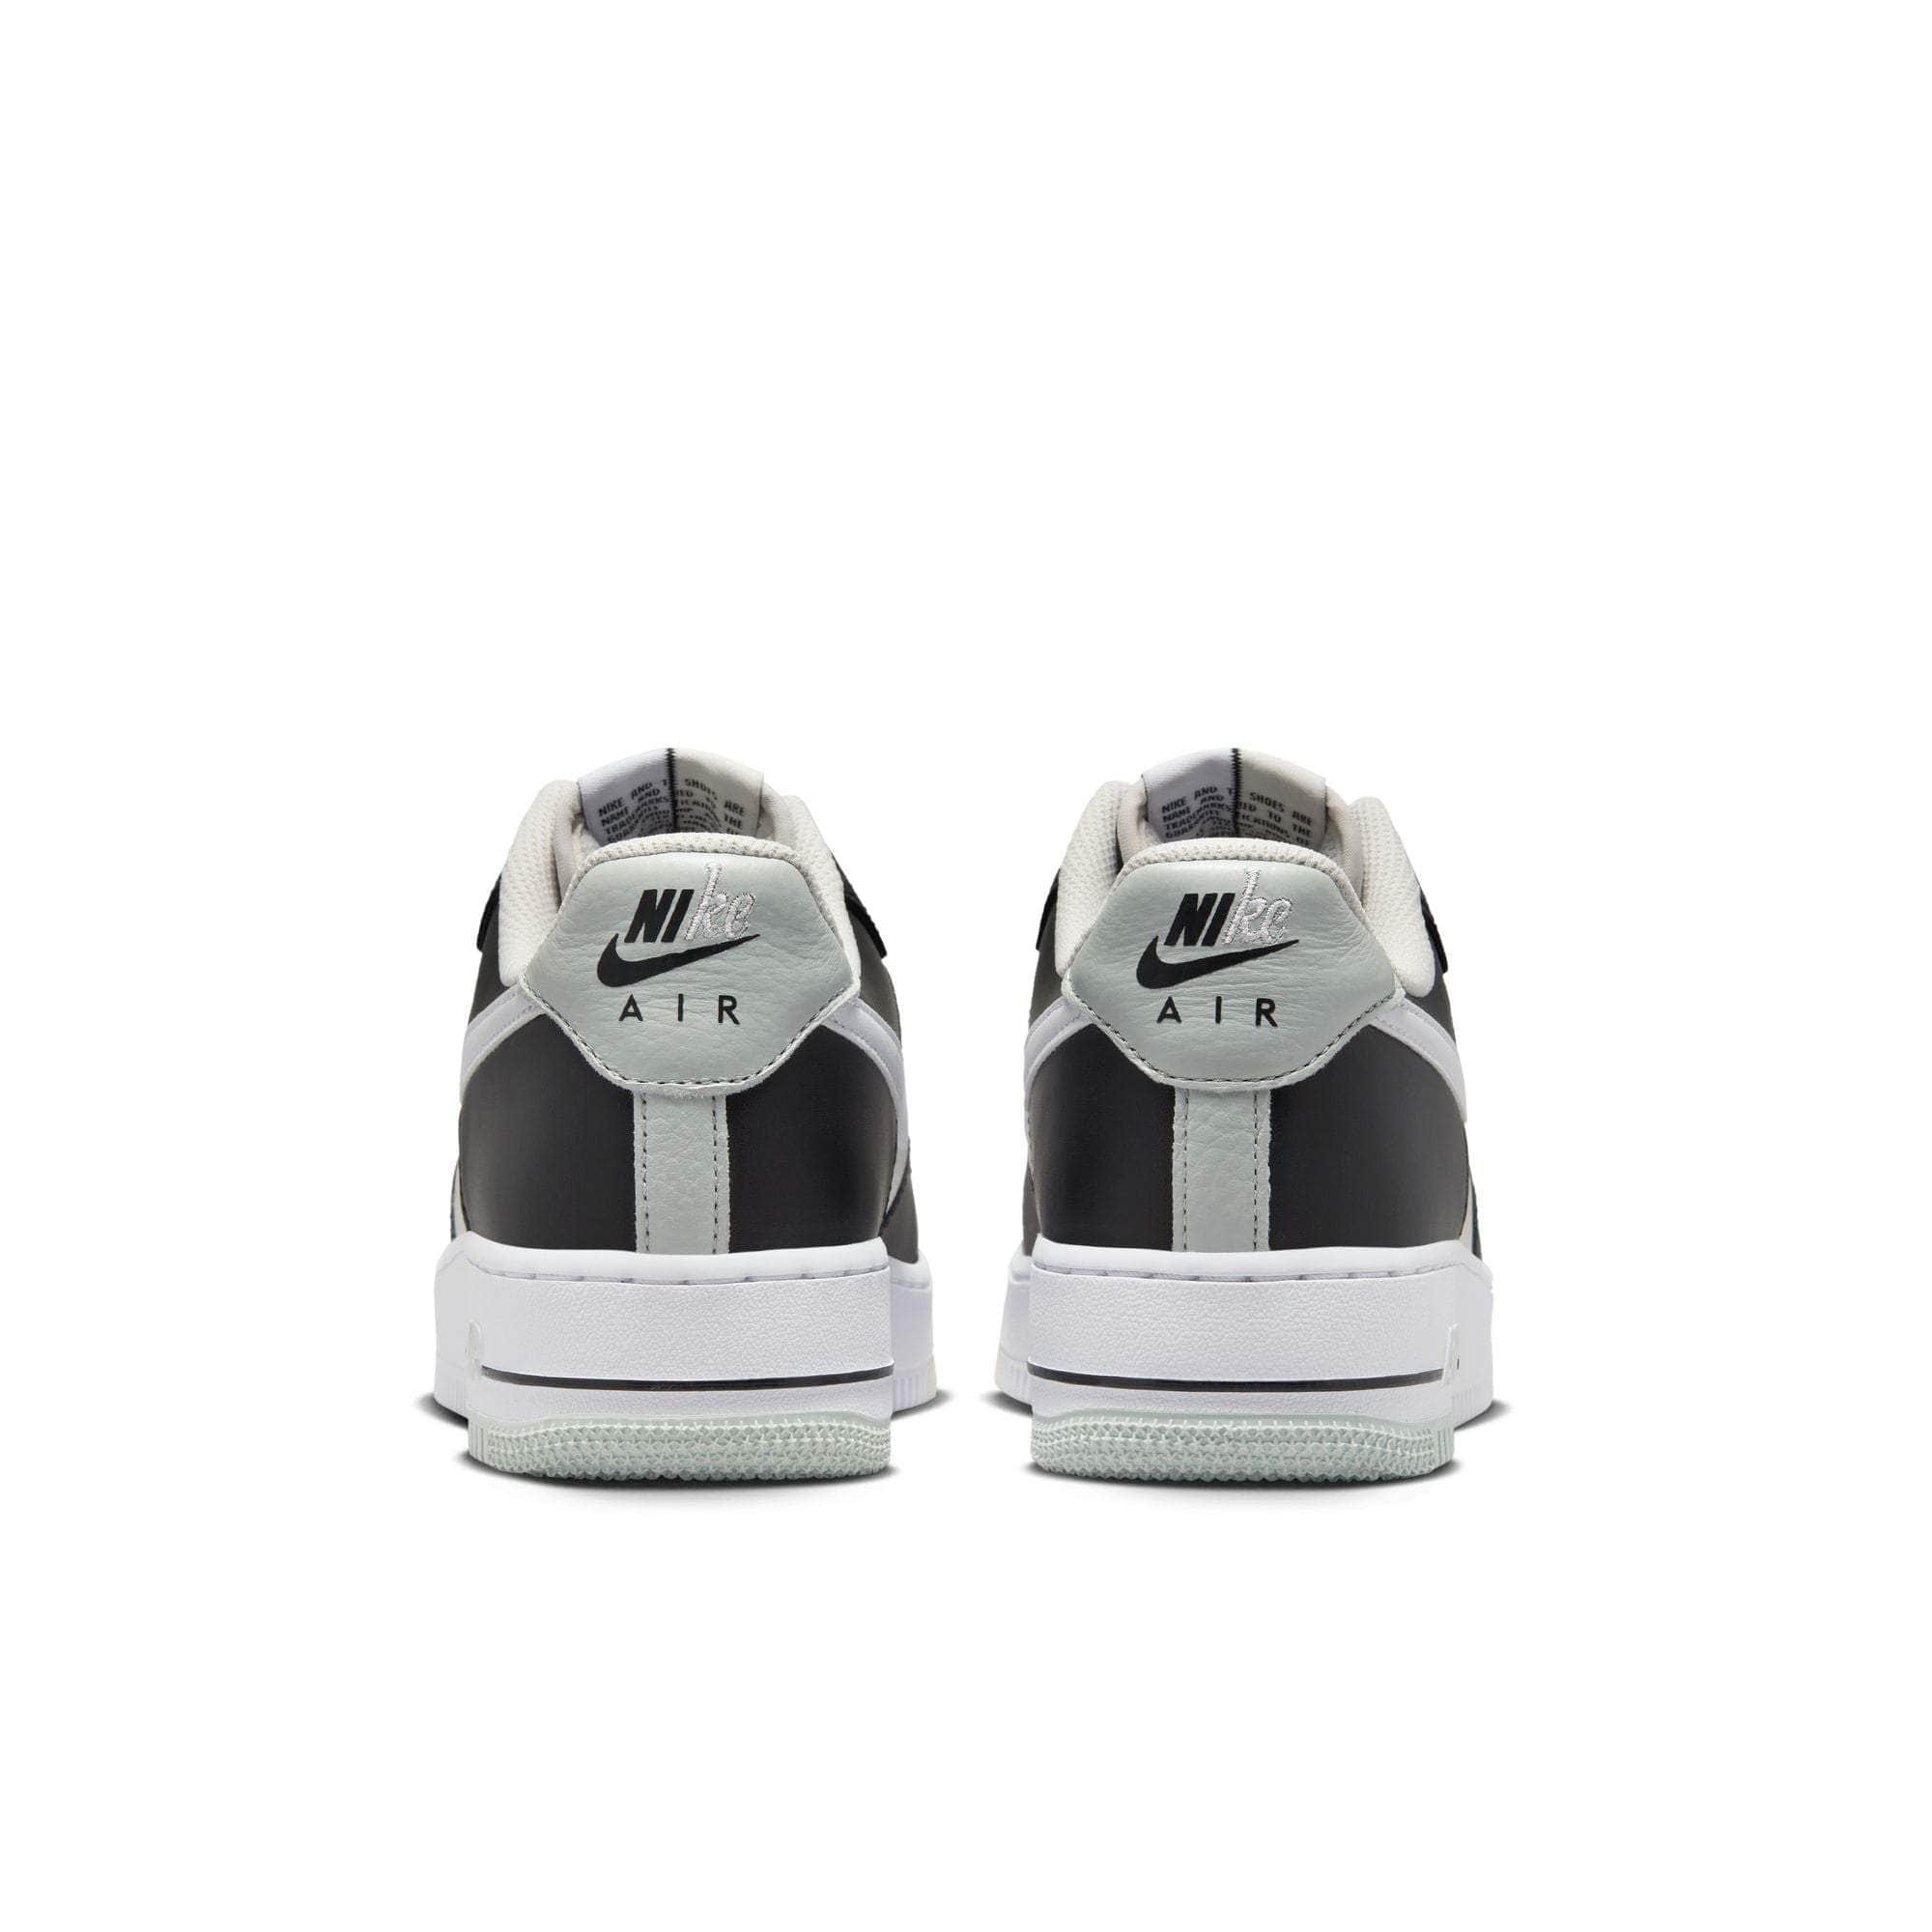 Nike Men's Air Force 1 '07 LV8 Shoes, Black